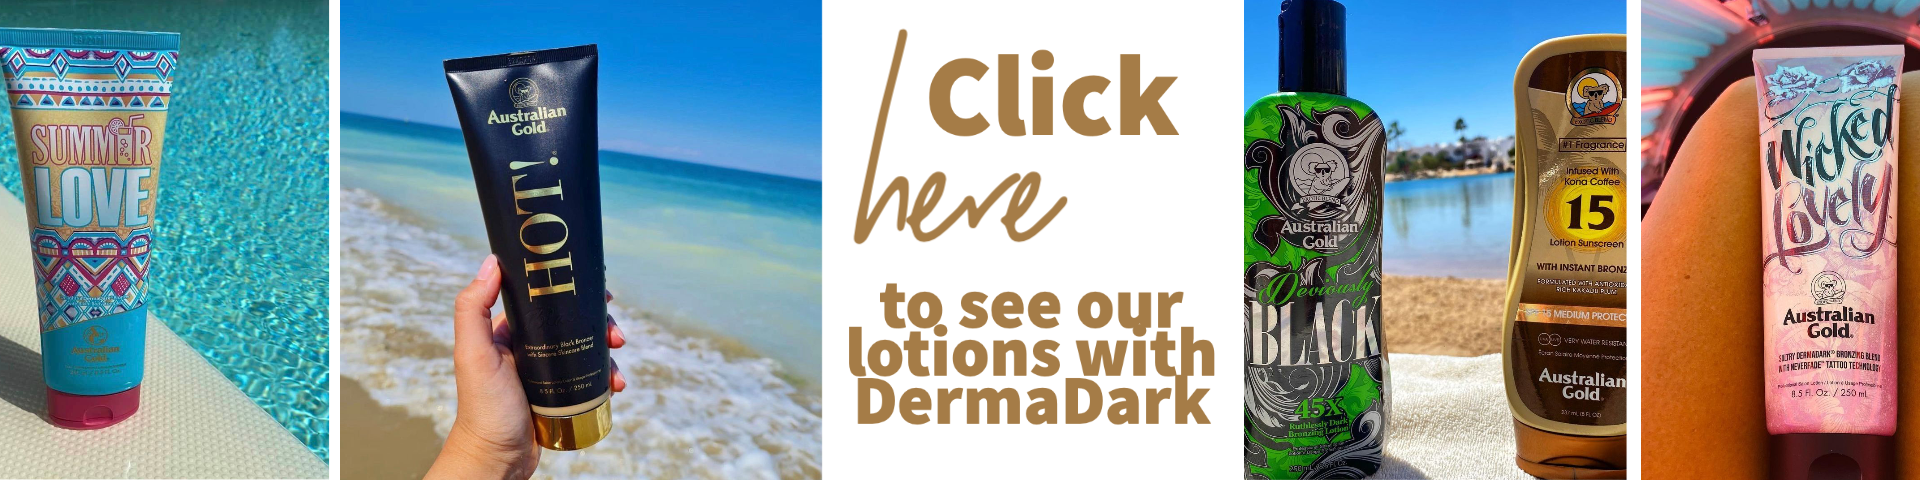 australian gold lotions with derma dark